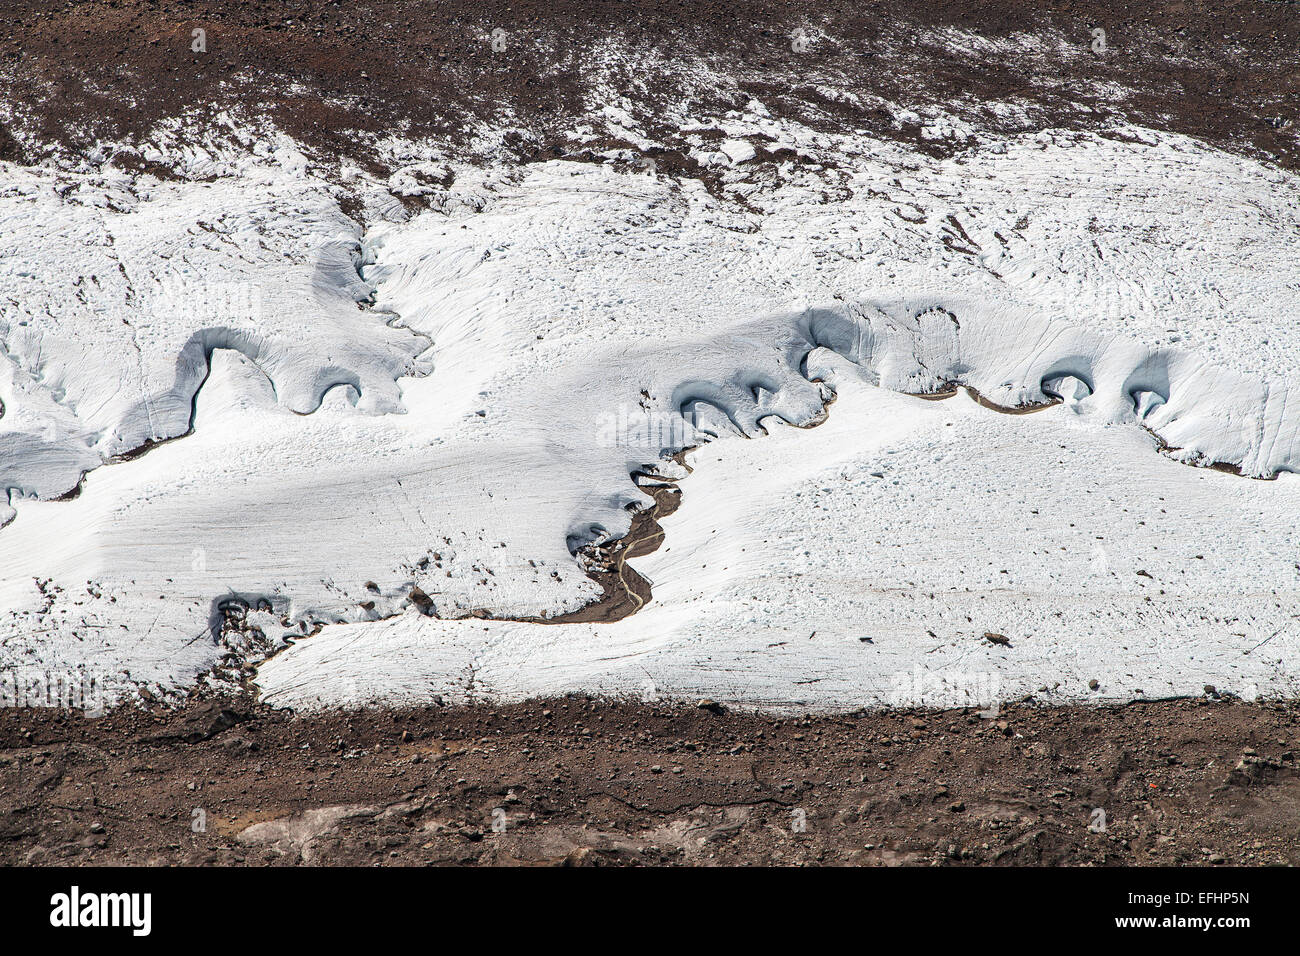 Streams winding through ice of Gorner glacier in the Swiss Alps. Stock Photo